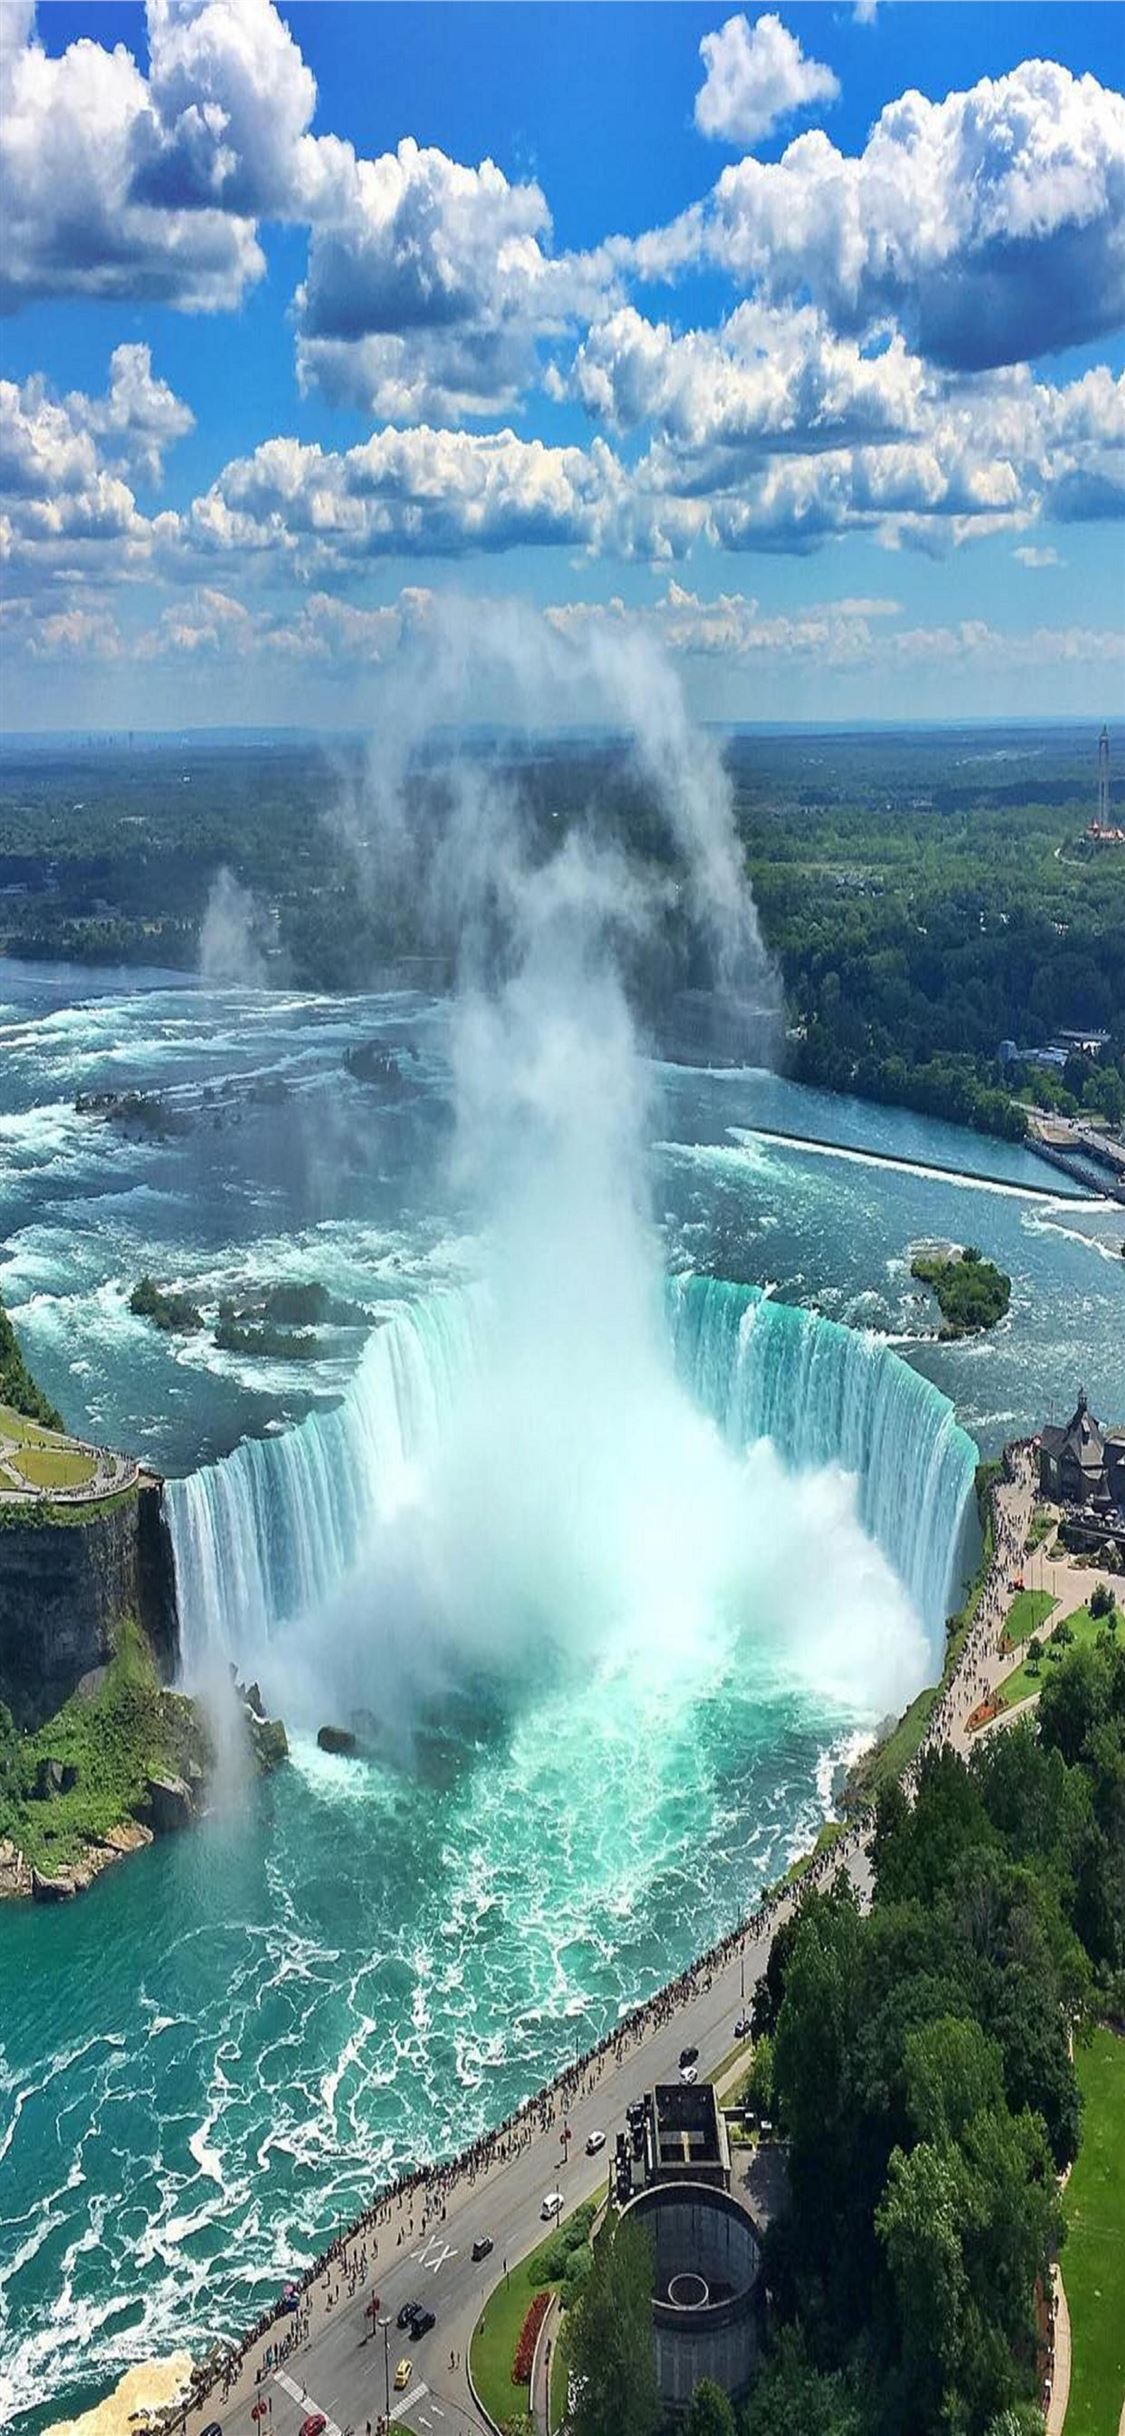 Iphone X Niagara Falls Wallpaper